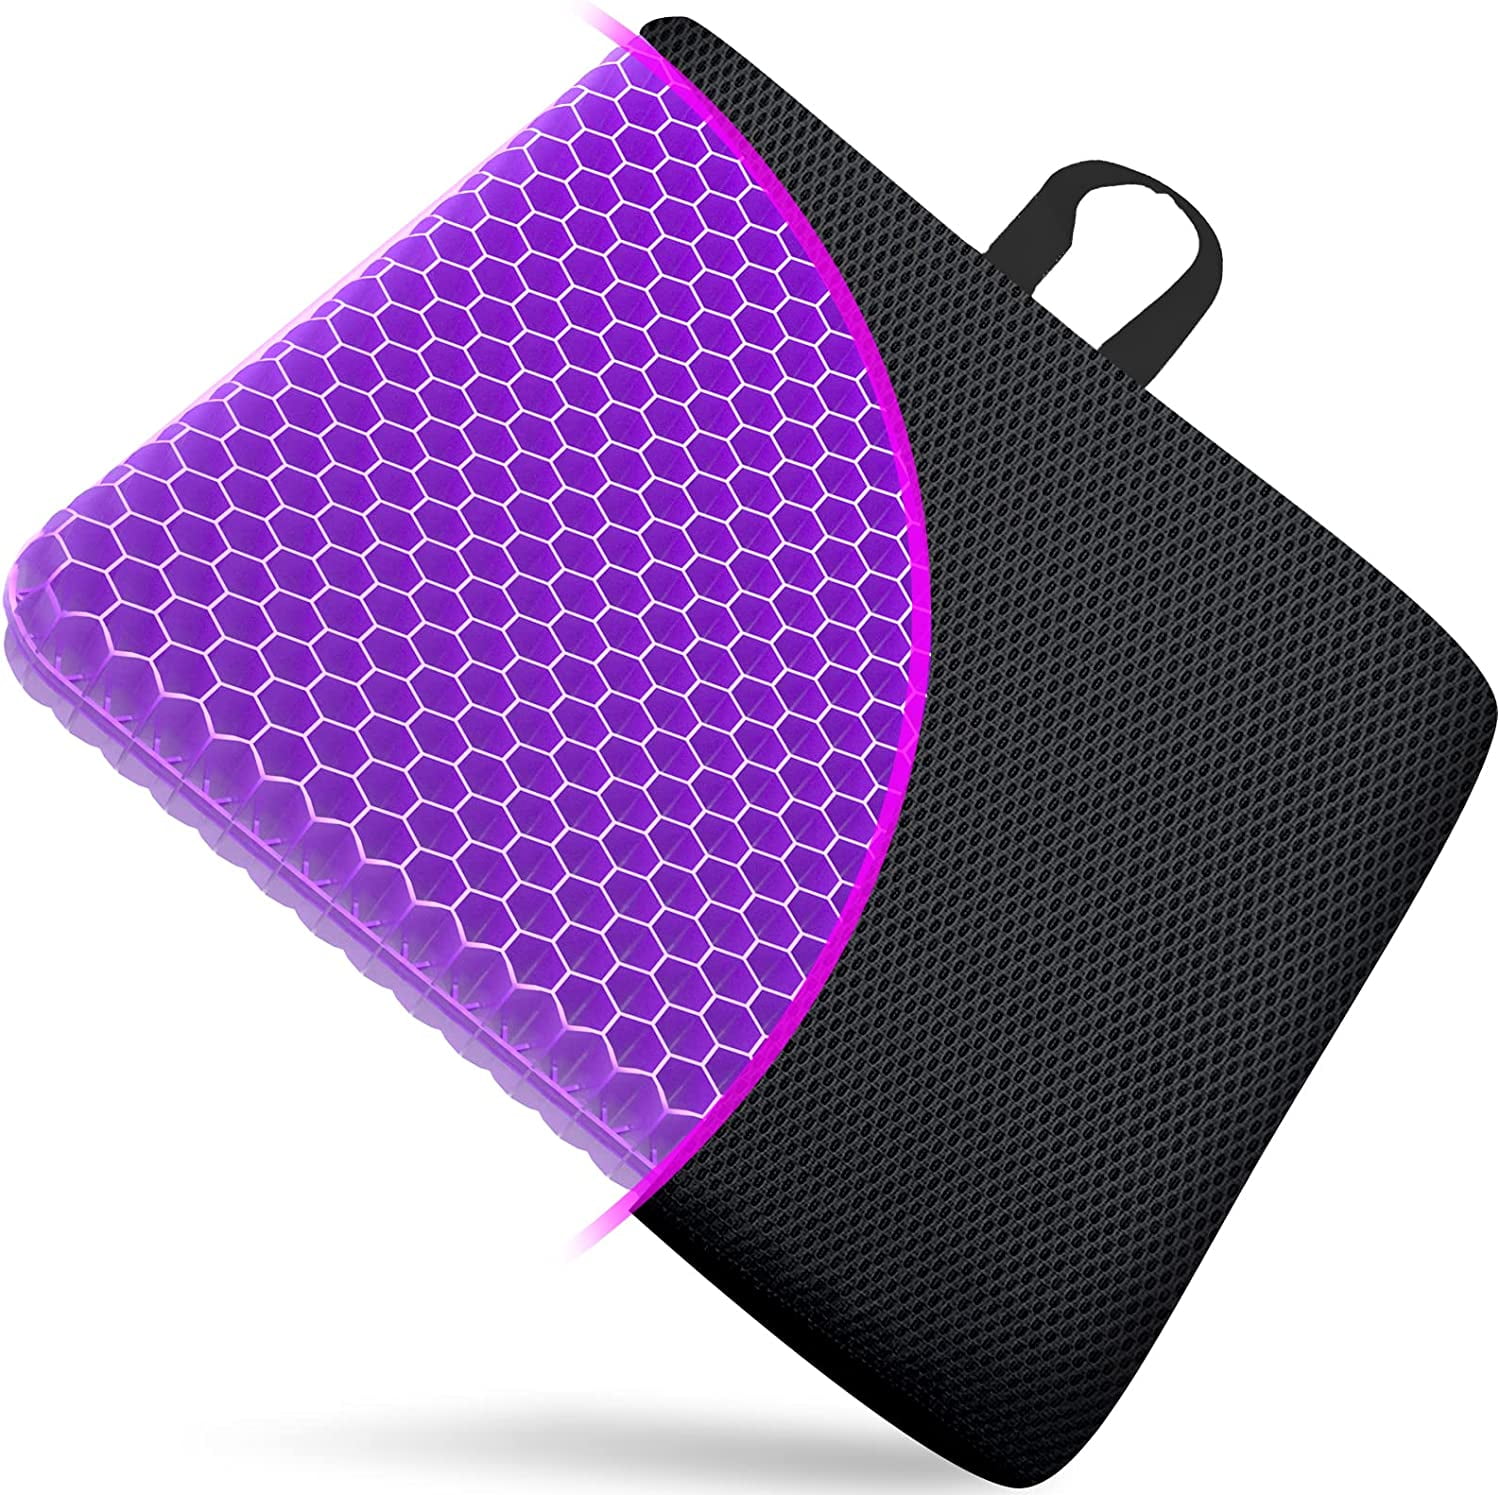 Breathable Honeycomb Design Pain Relief Egg Seat Cushion Gel Seat Cushion Purple, 16.5 x 14.5 x 1.4inch Home Office Chair Cars Wheelchair 